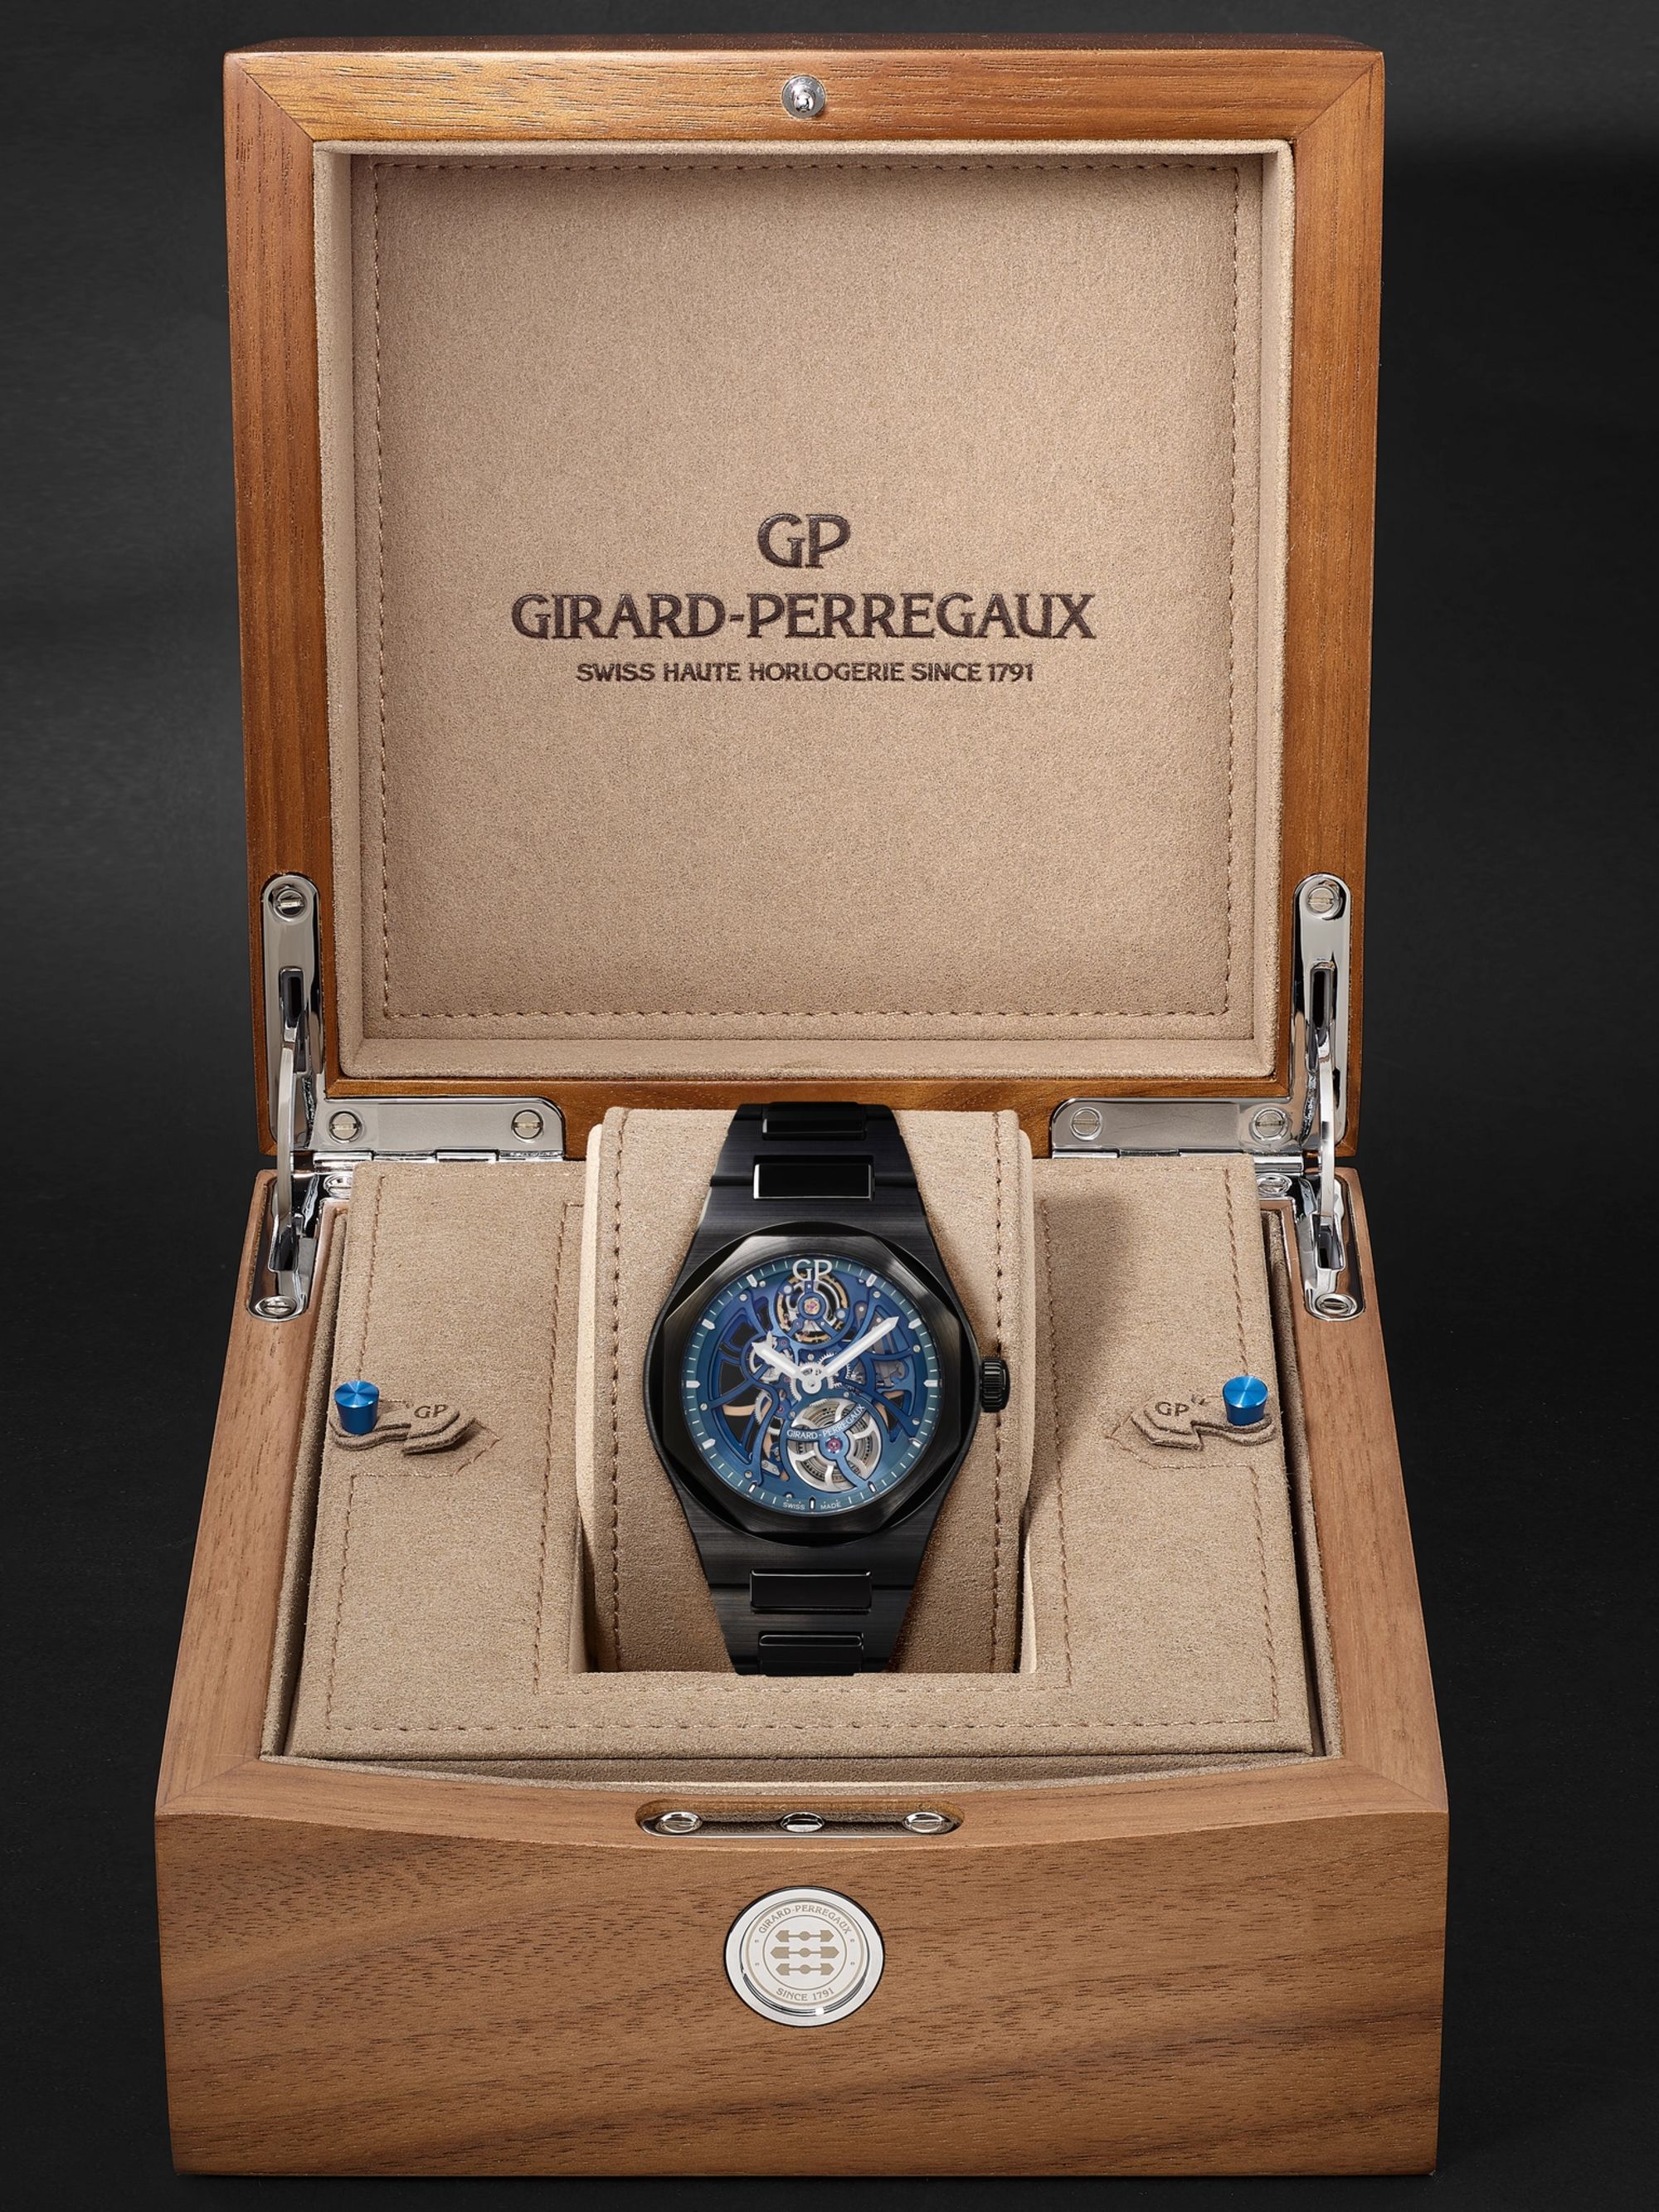 GIRARD-PERREGAUX Laureato Skeleton Automatic 42mm Ceramic Watch, Ref. No. 81015-21-001-32A